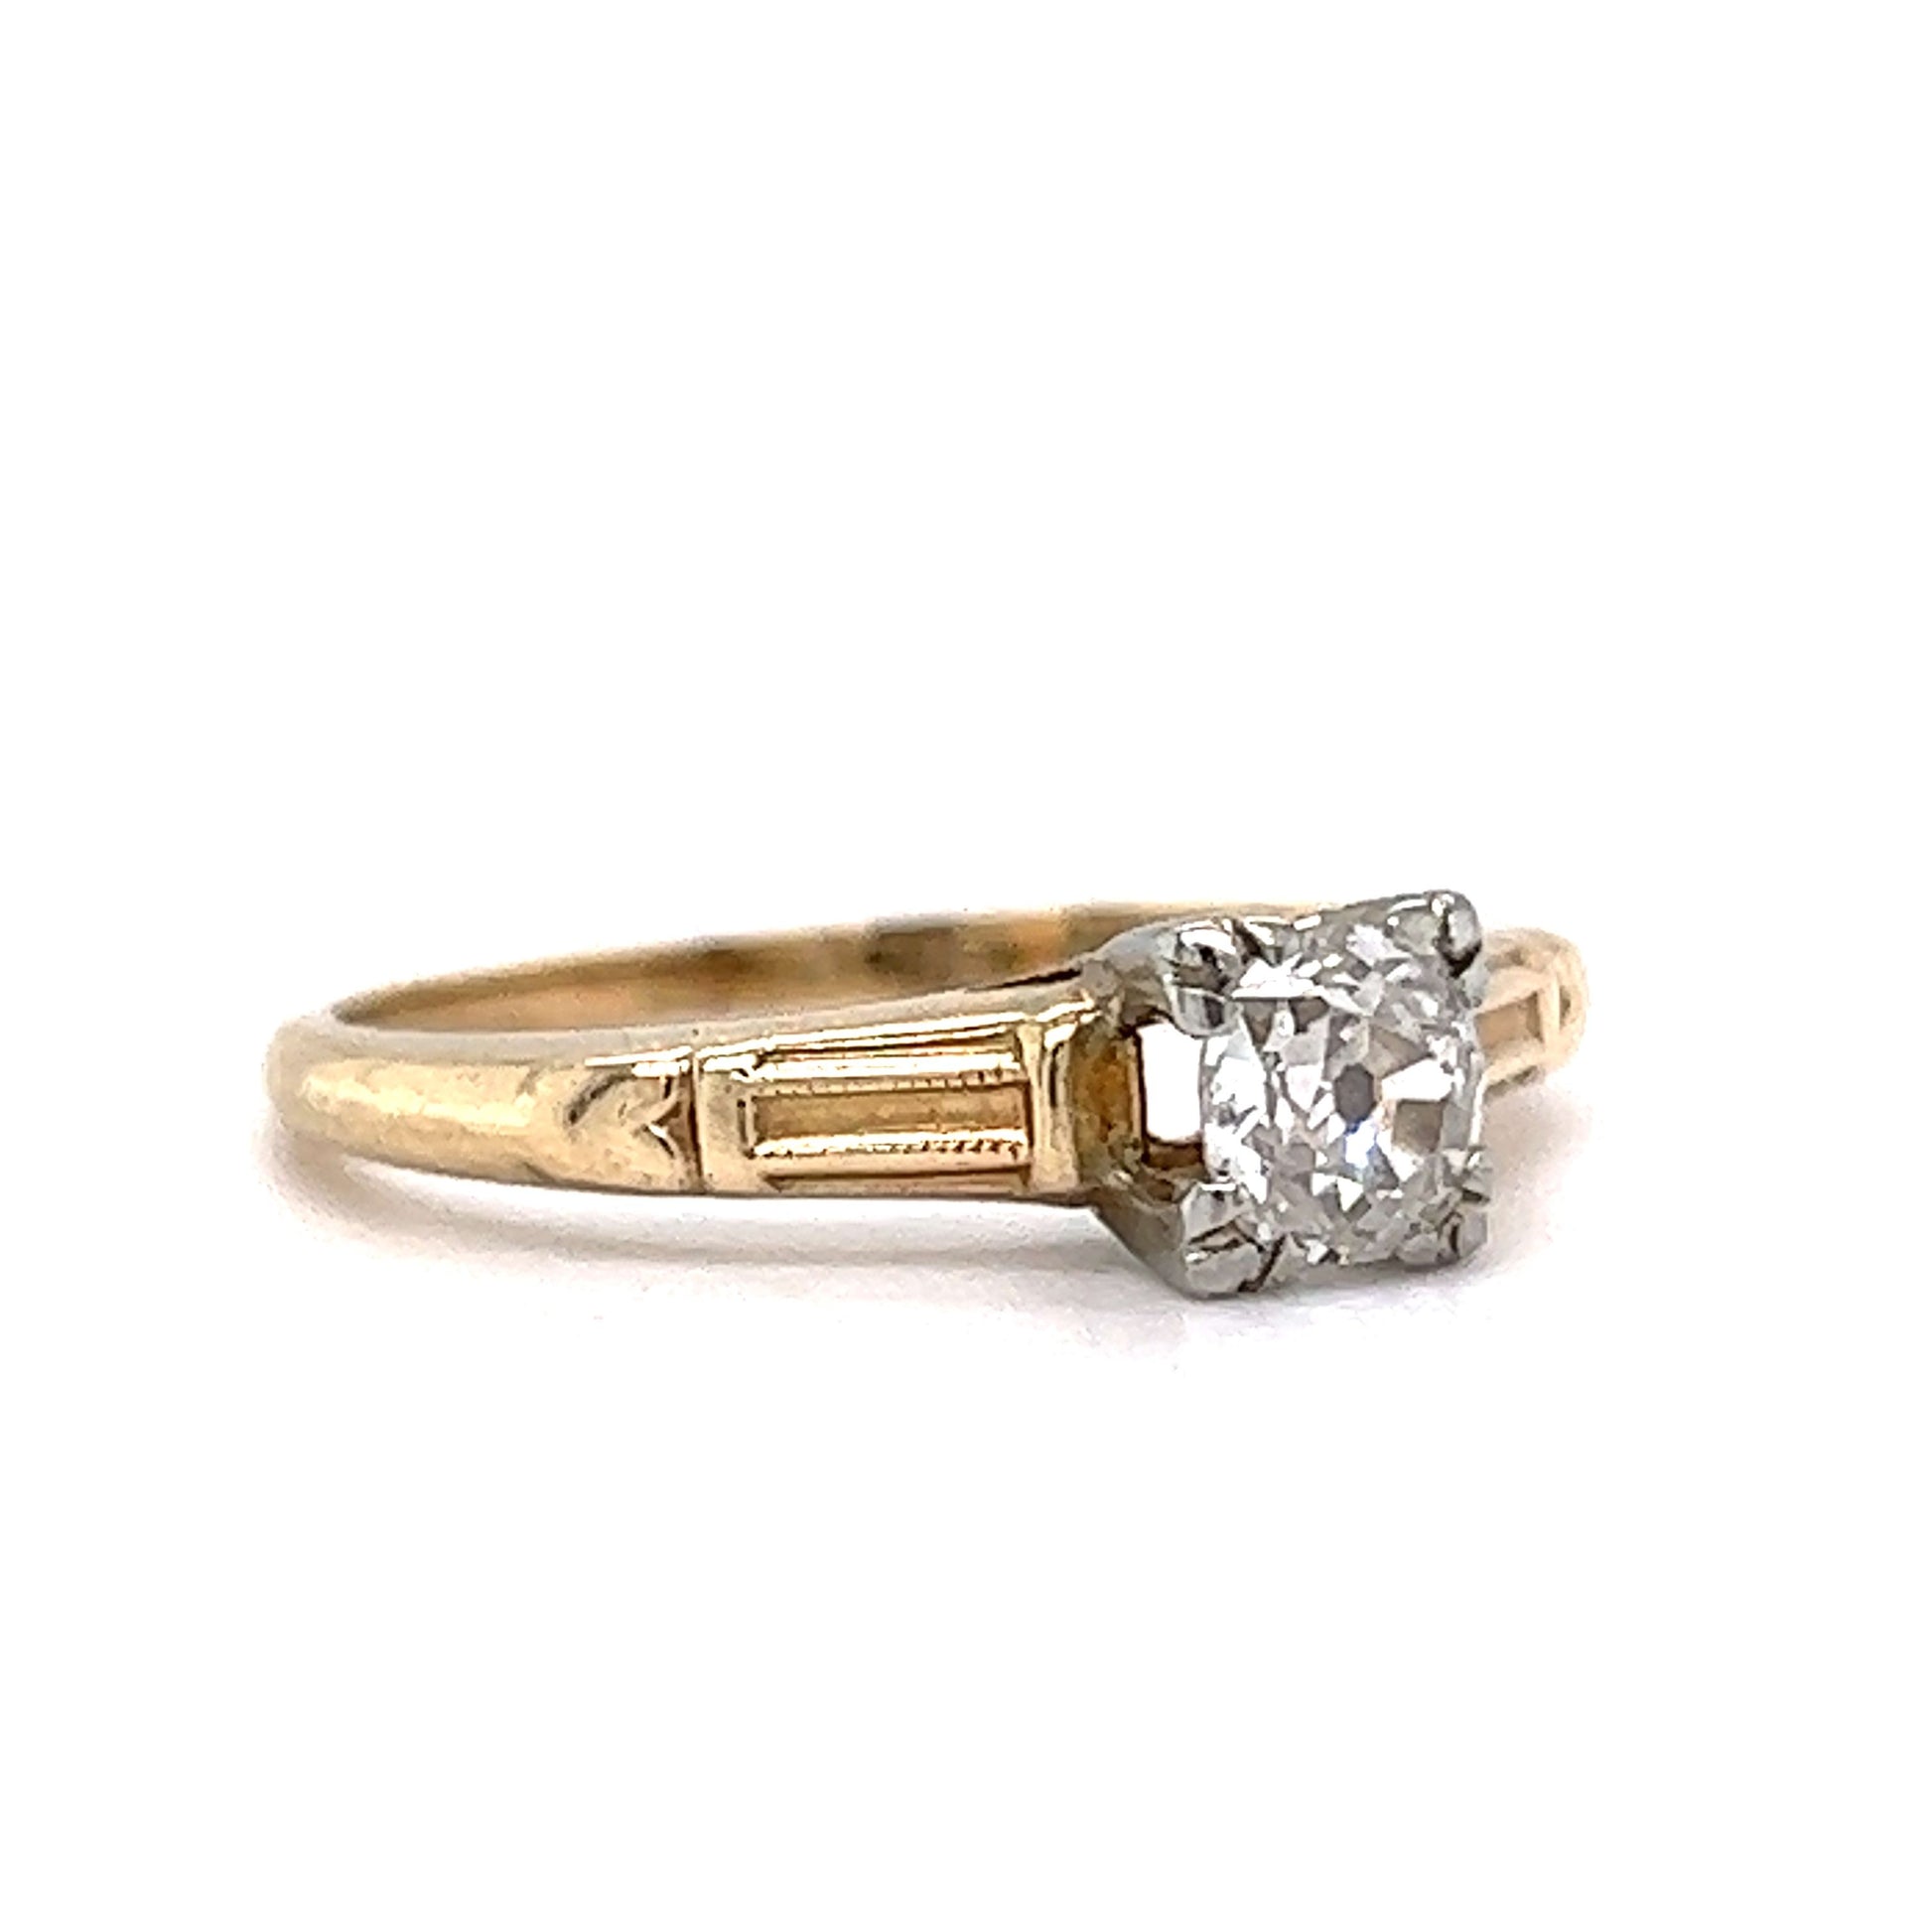 Vintage  Vintage 14k Yellow Gold Diamond Ring with 18k White Gold